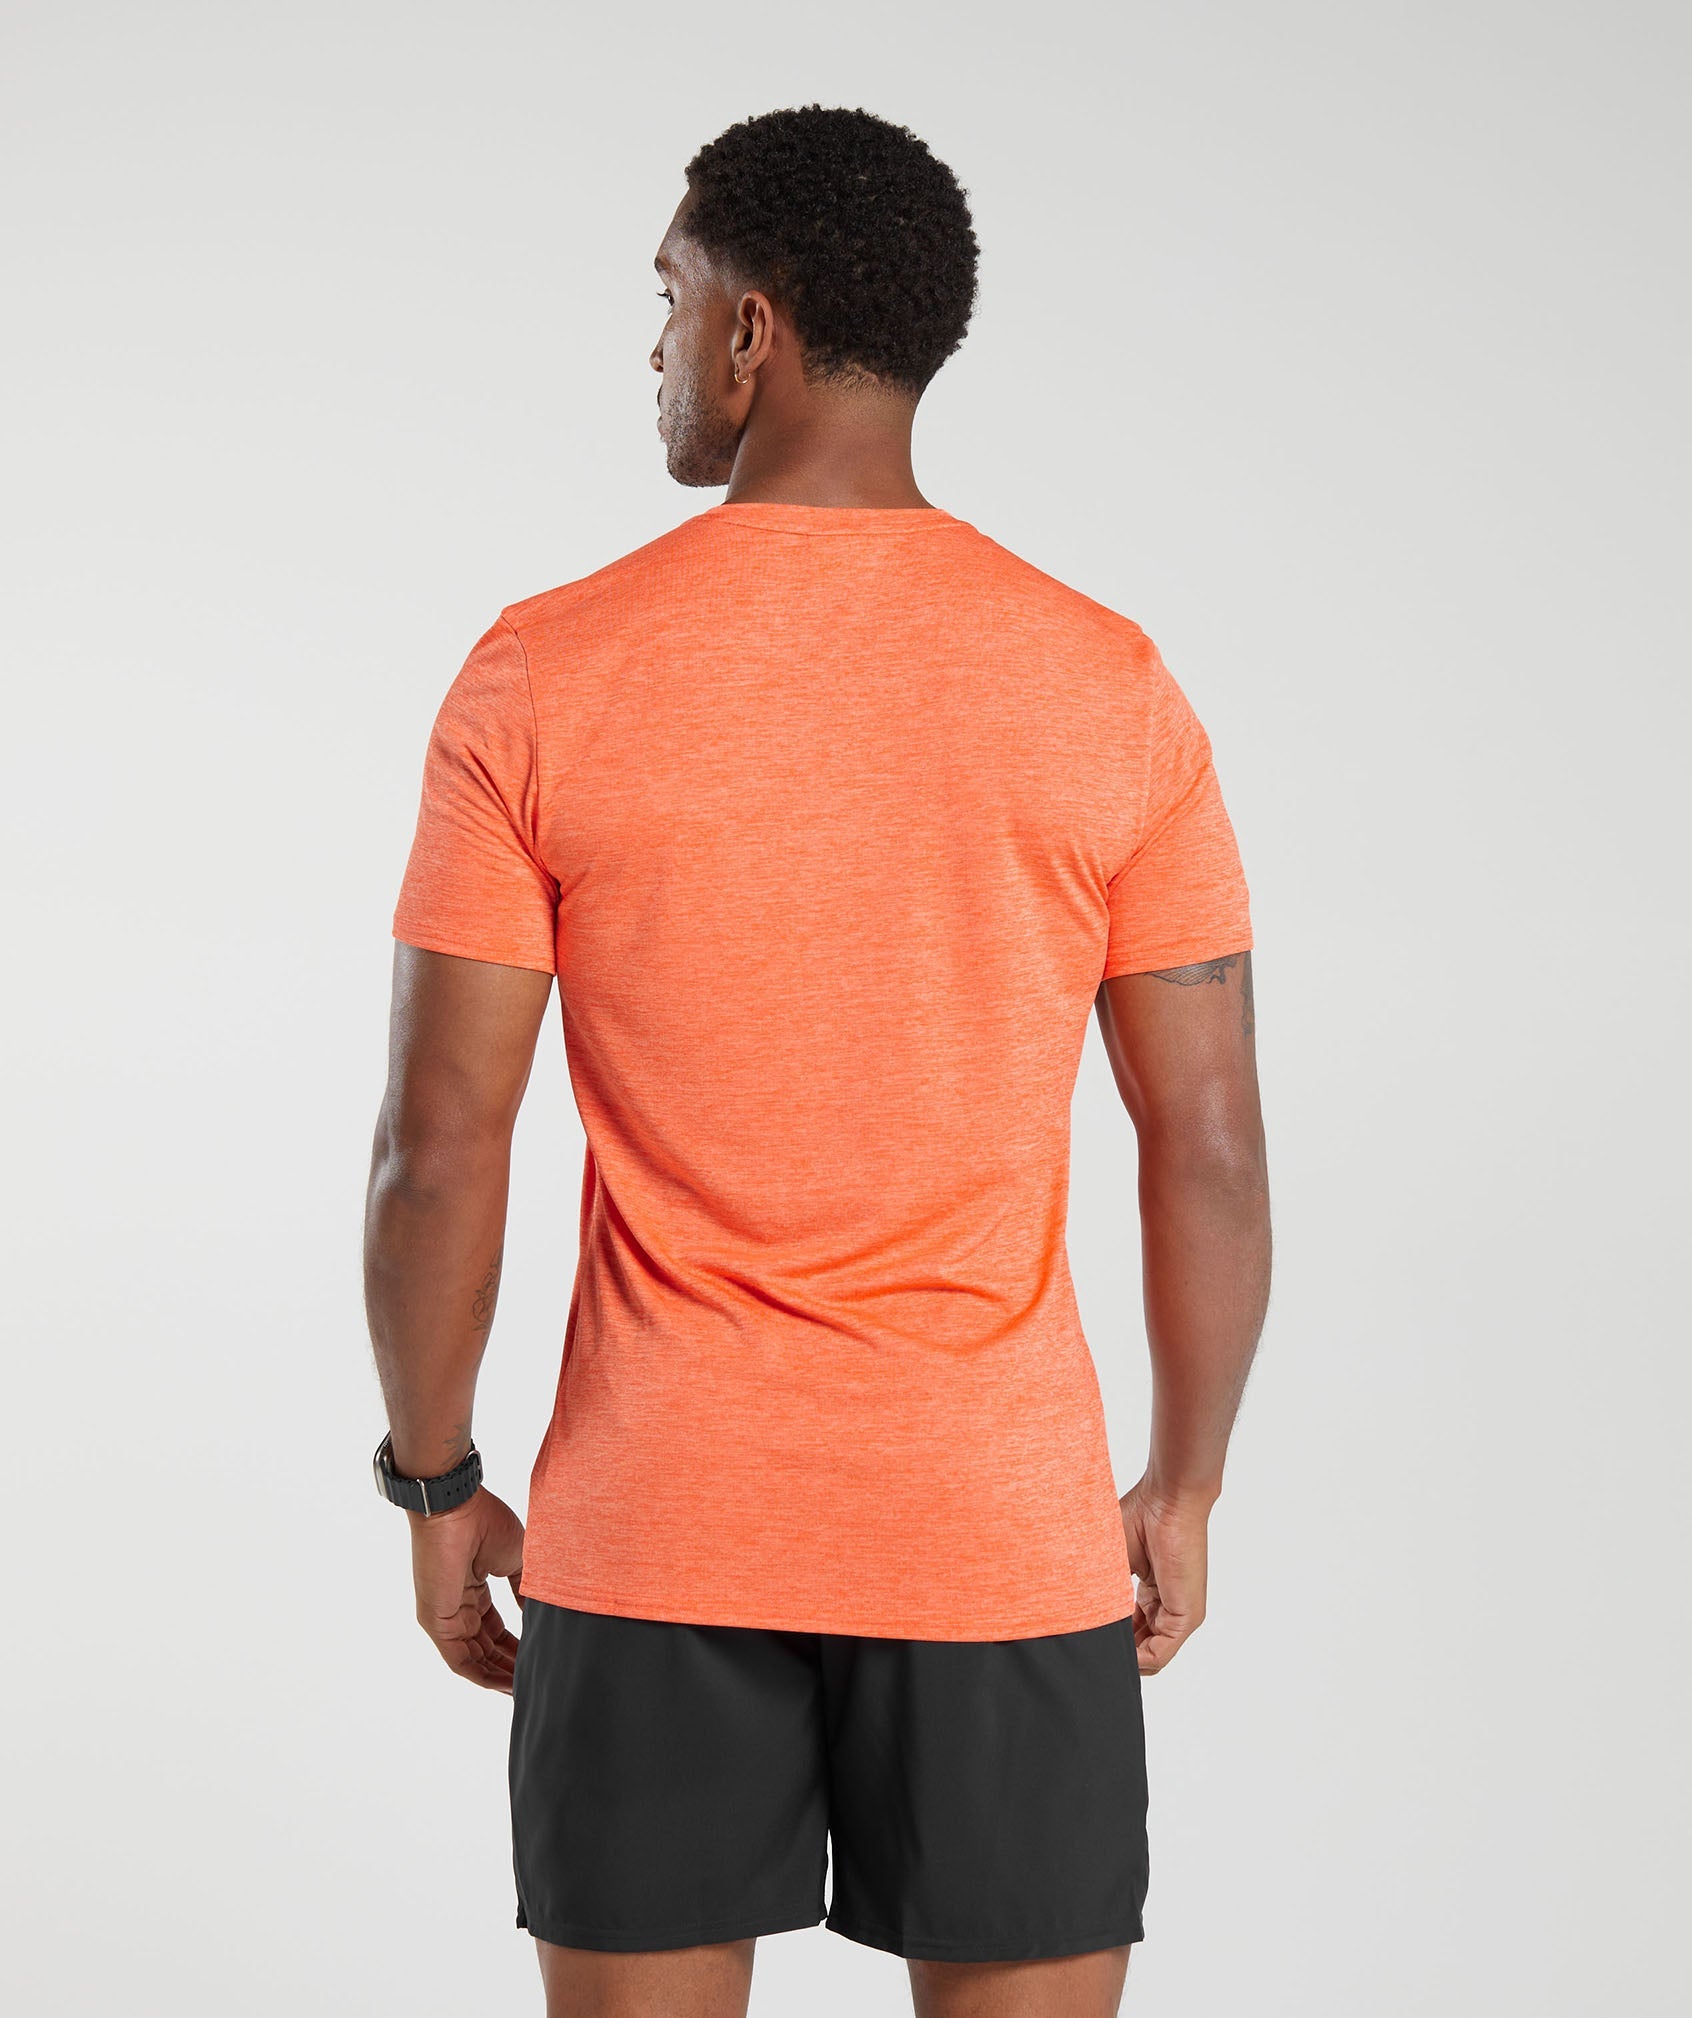 Arrival Marl T-Shirt in Ignite Orange/Ombre Orange Marl - view 2